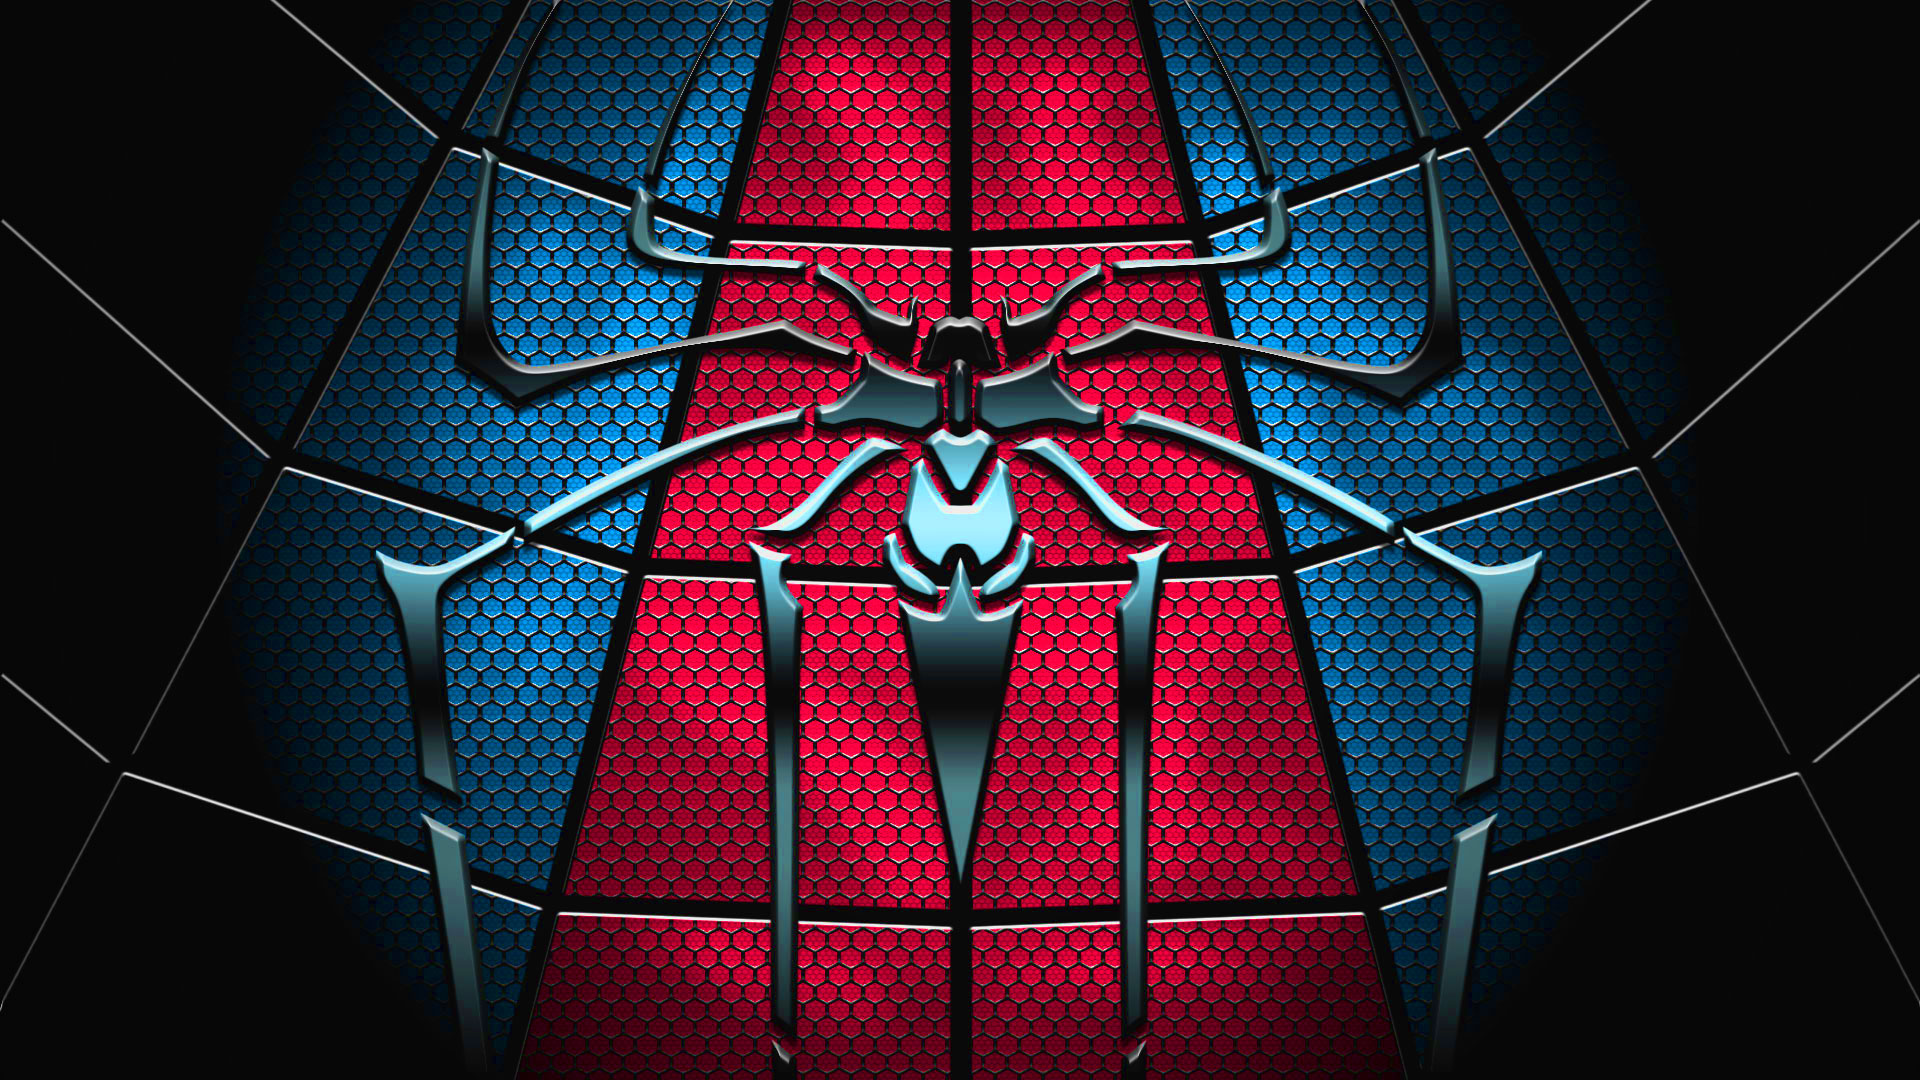 Blue Spiderman Artwork Wallpapers